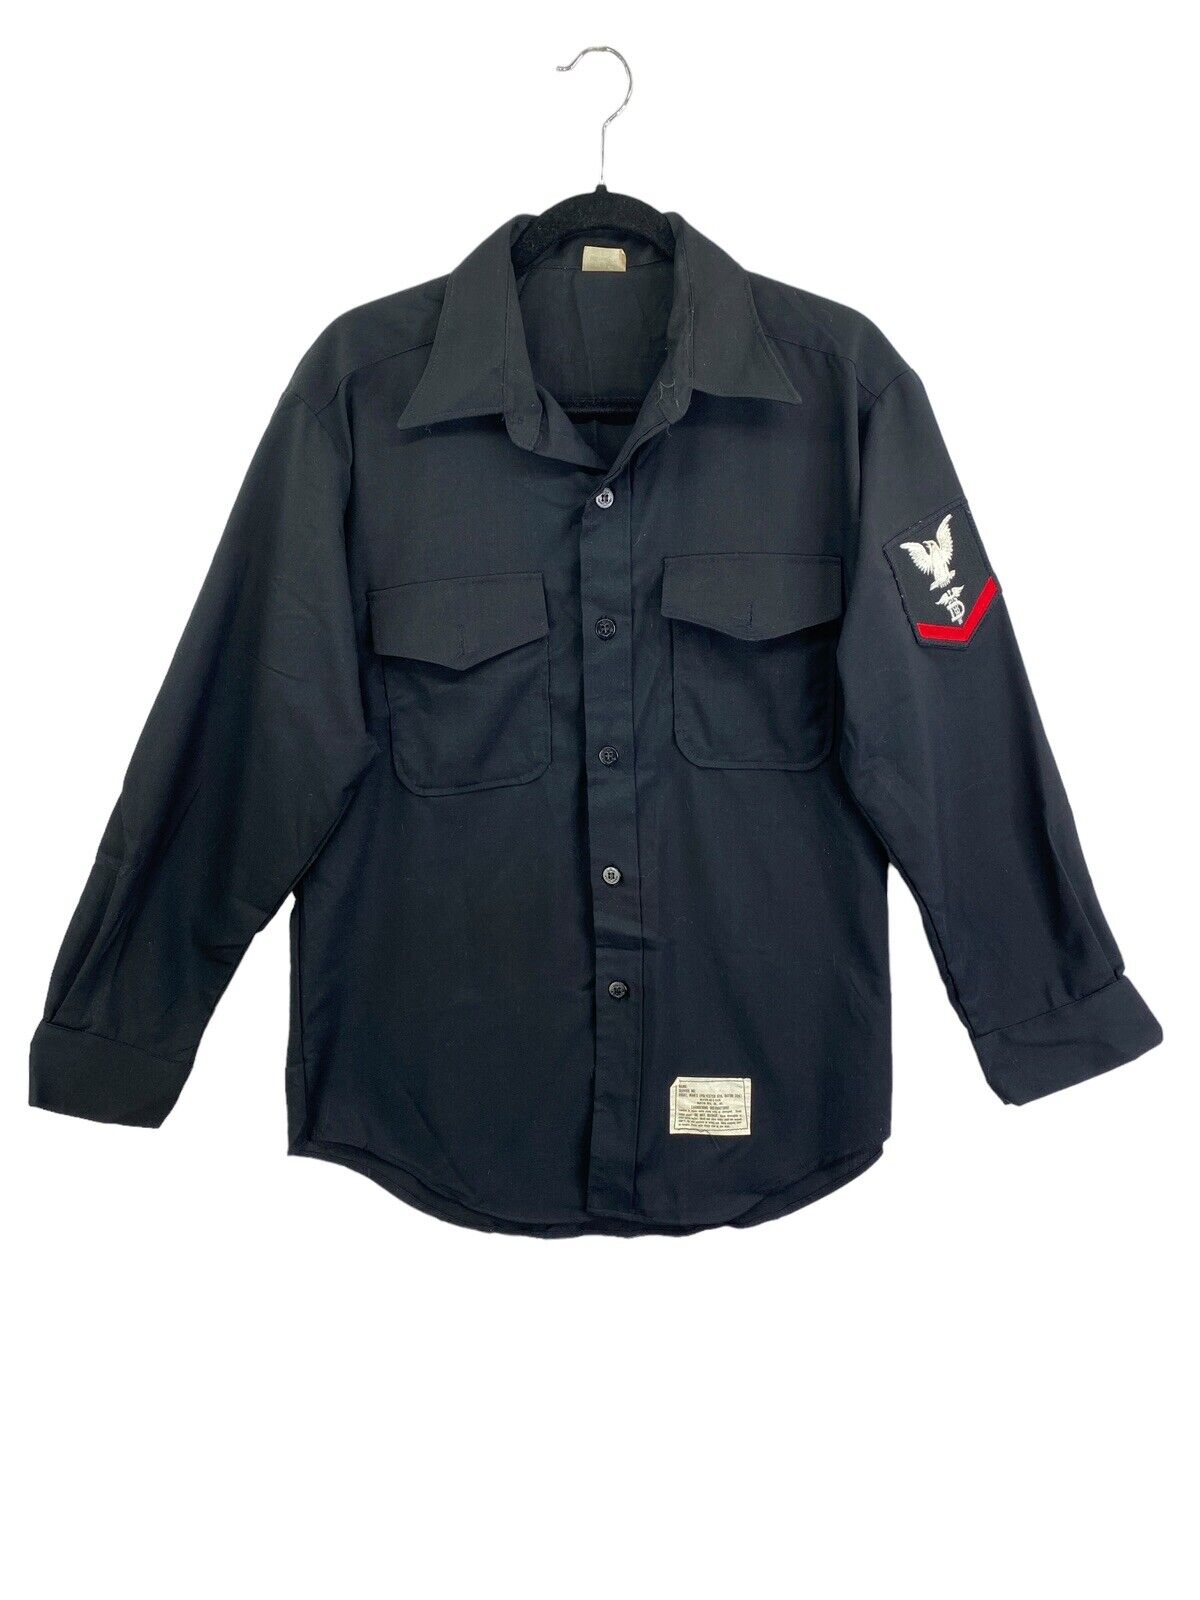 Navy Service Uniform Shirt, Wave Dental Tech Rate Size 161/2 x 33 Black